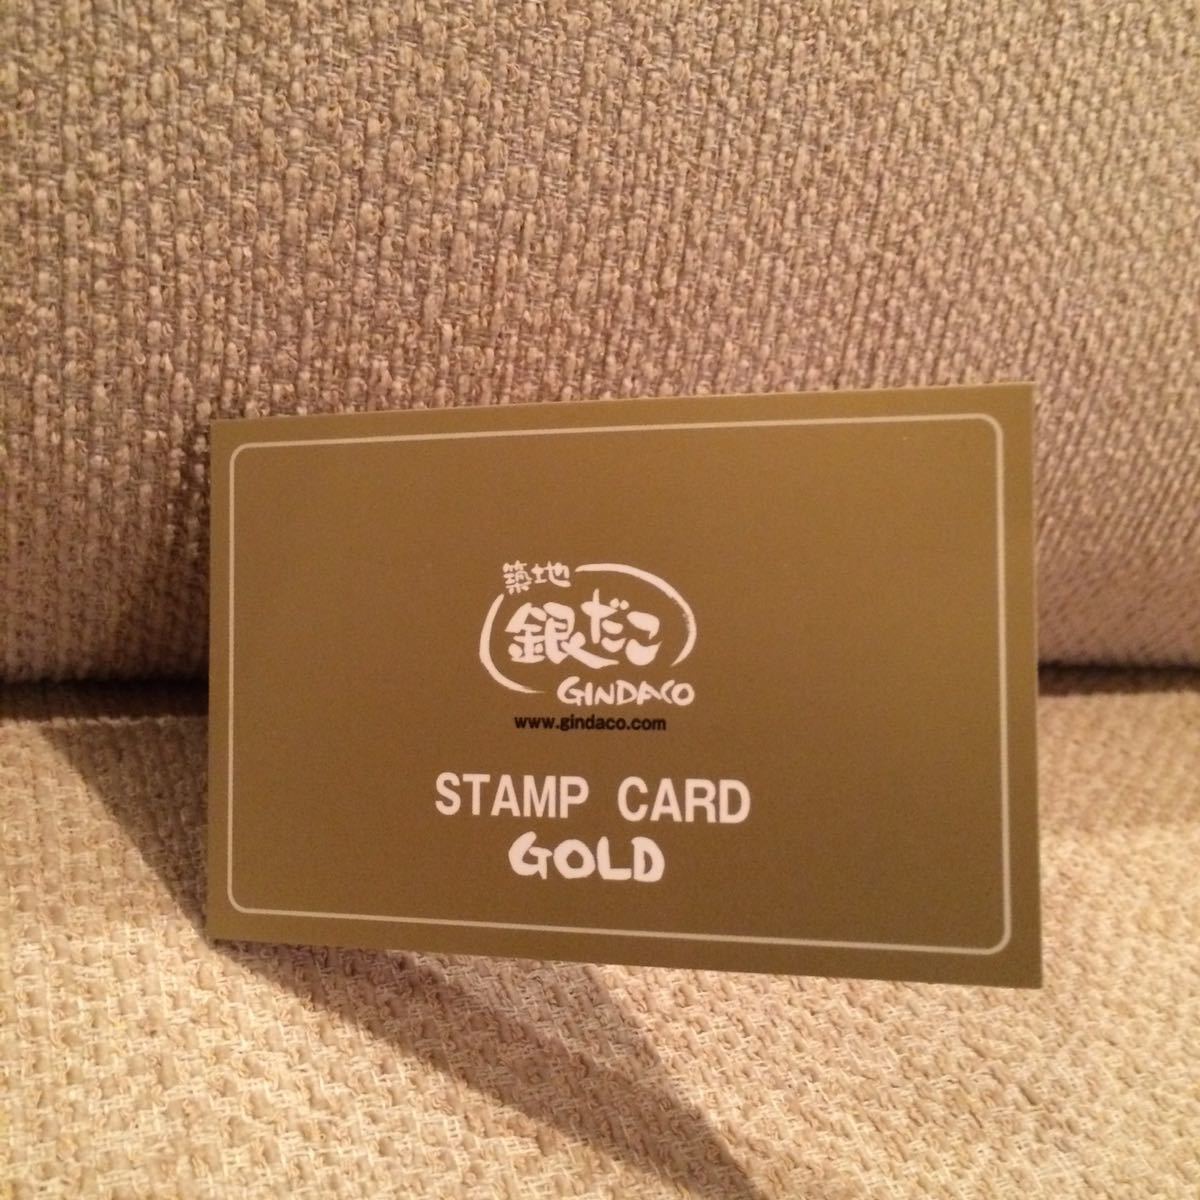 [Прибыль / Бесплатная доставка] Tsukiji Gin Dako Mamp Card Card Gold Stamp Press 1 шт.